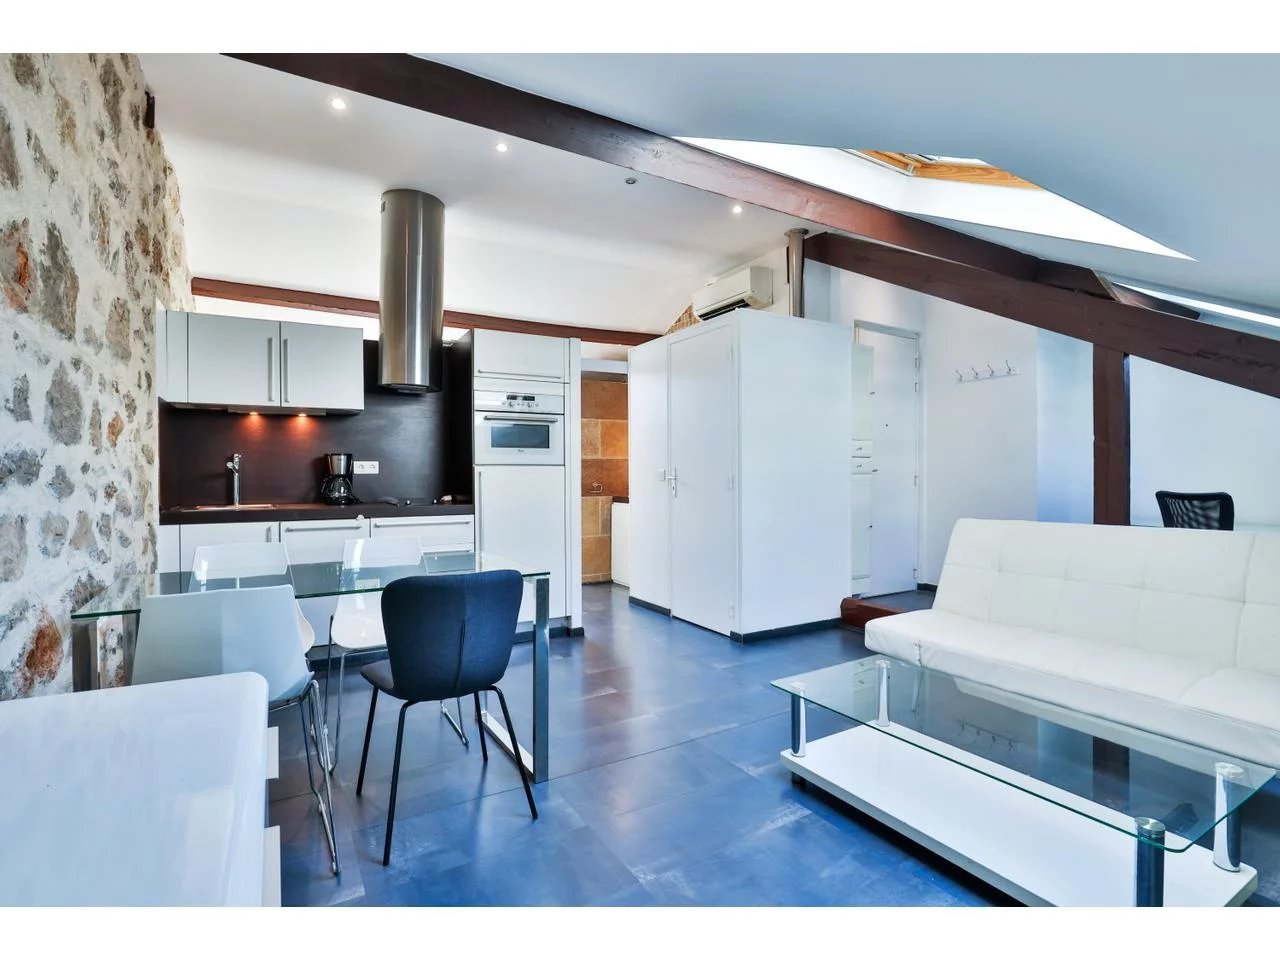 Appartement  2 Locali 63.72m2  In vendita   199 000 €